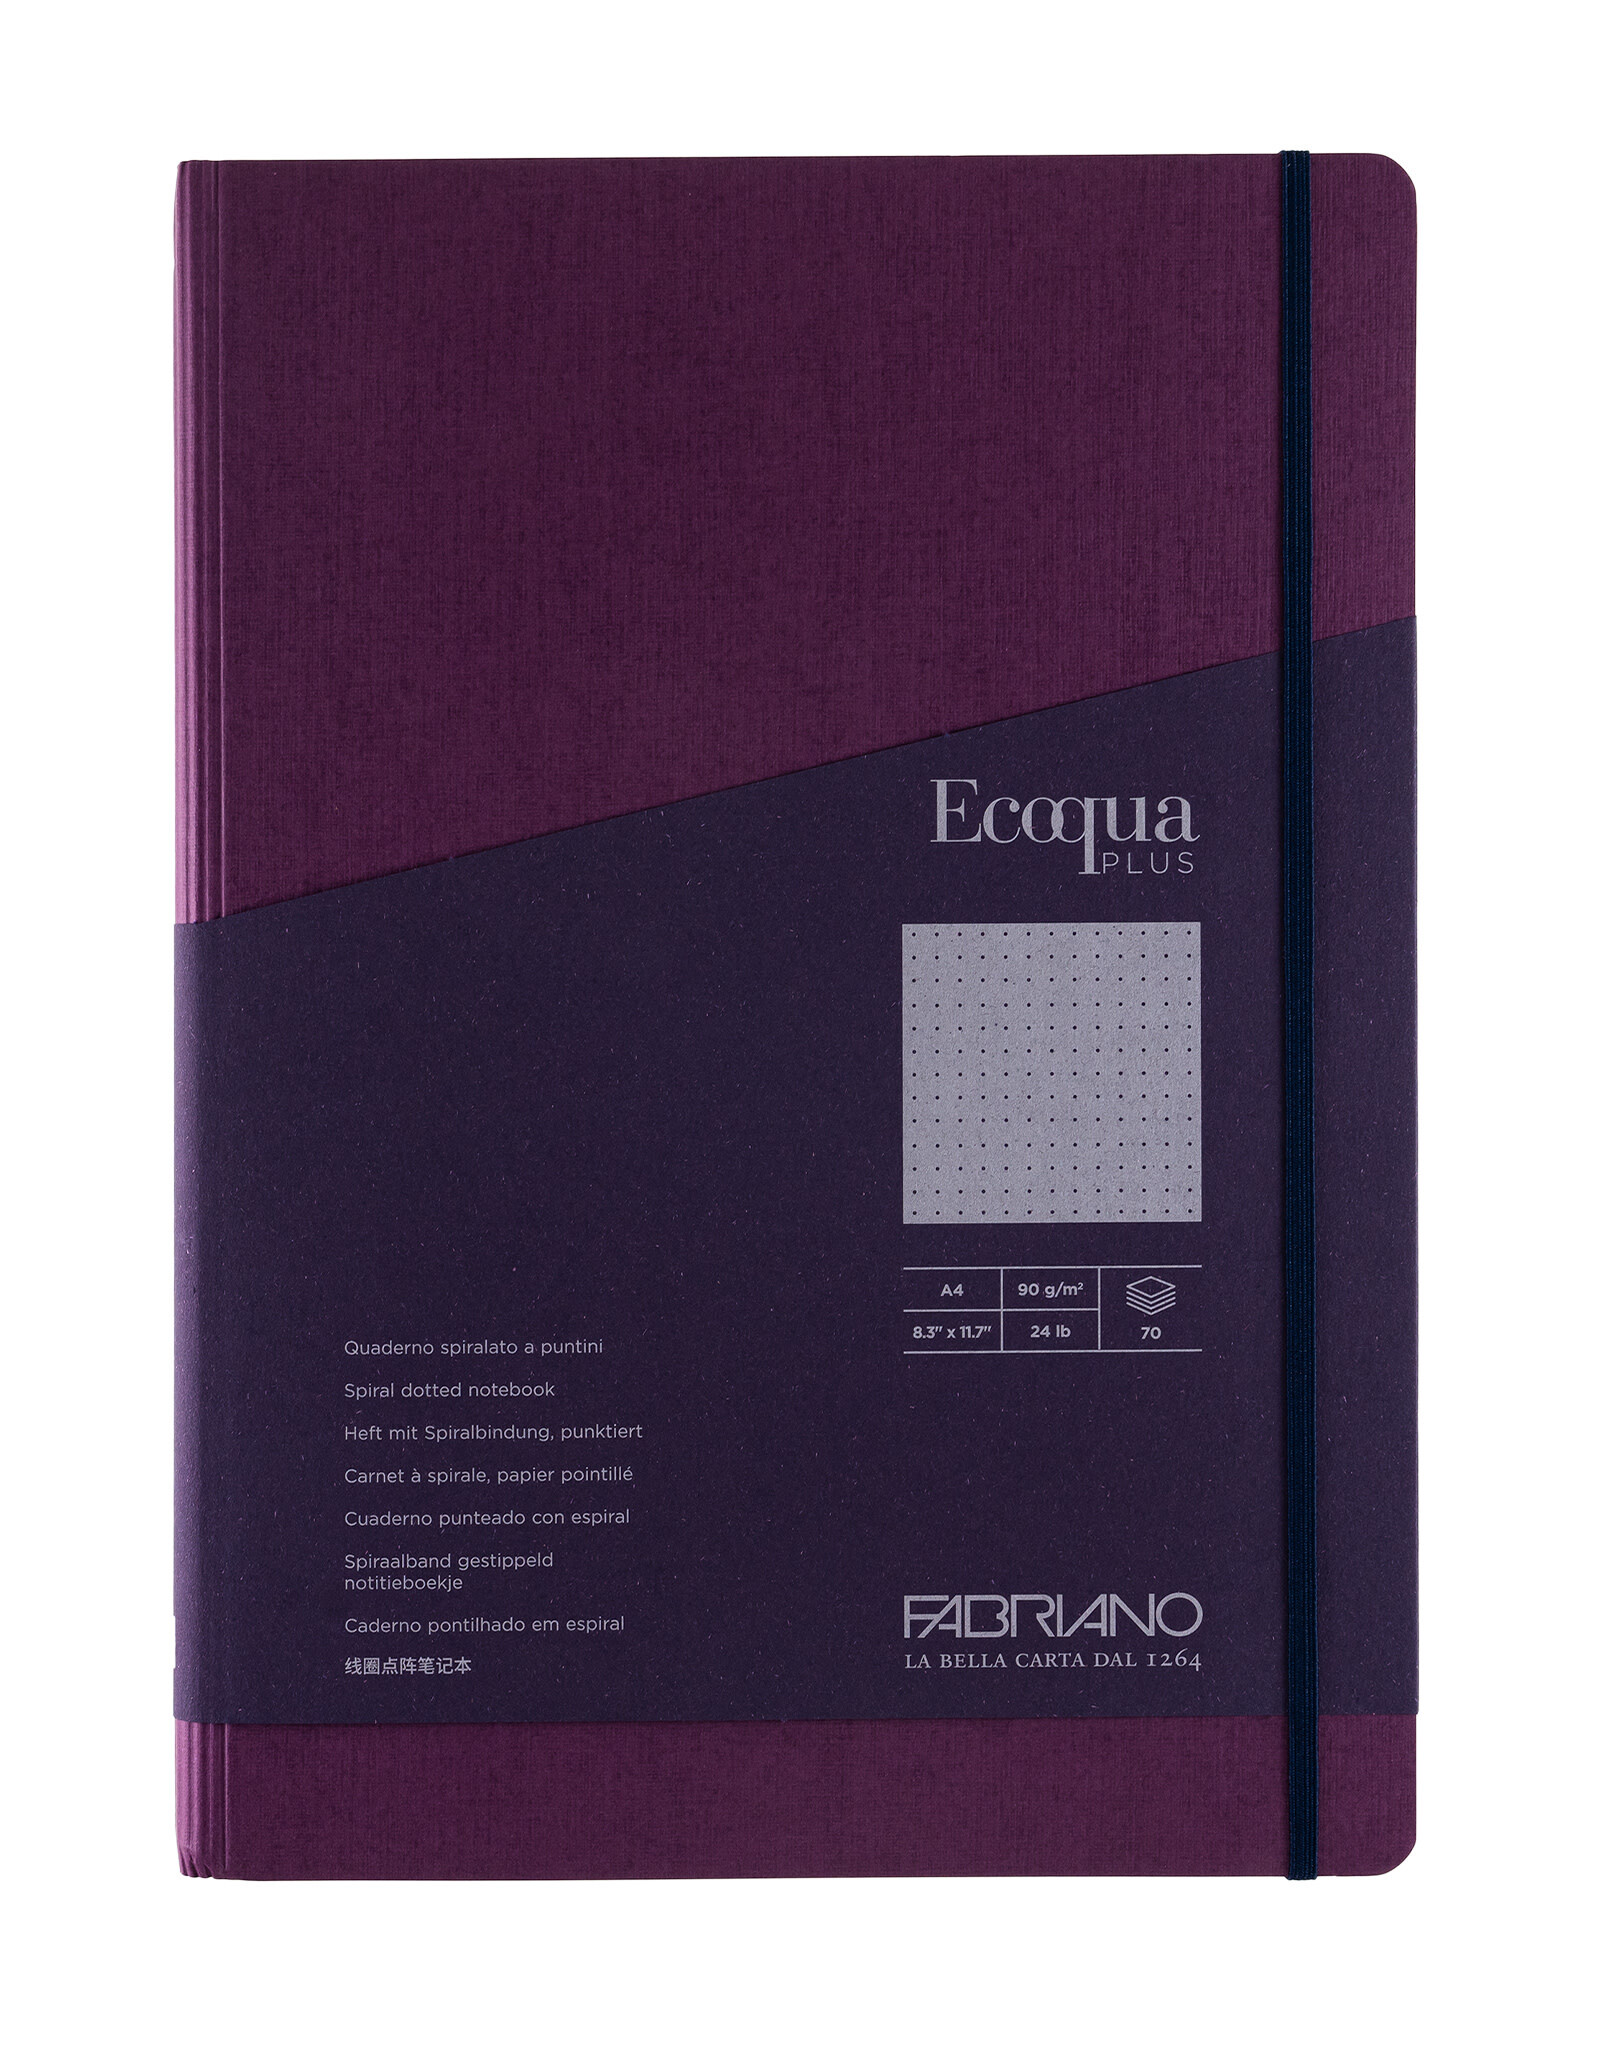 Ecoqua Plus Hidden Spiral Notebook, Wine, A4, Dotted